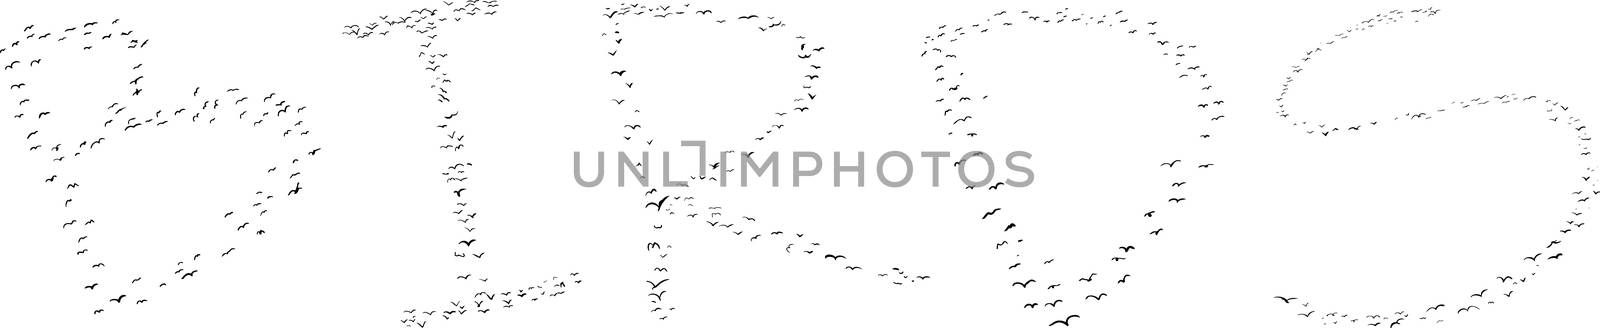 Flock of Birds on White by TheBlackRhino